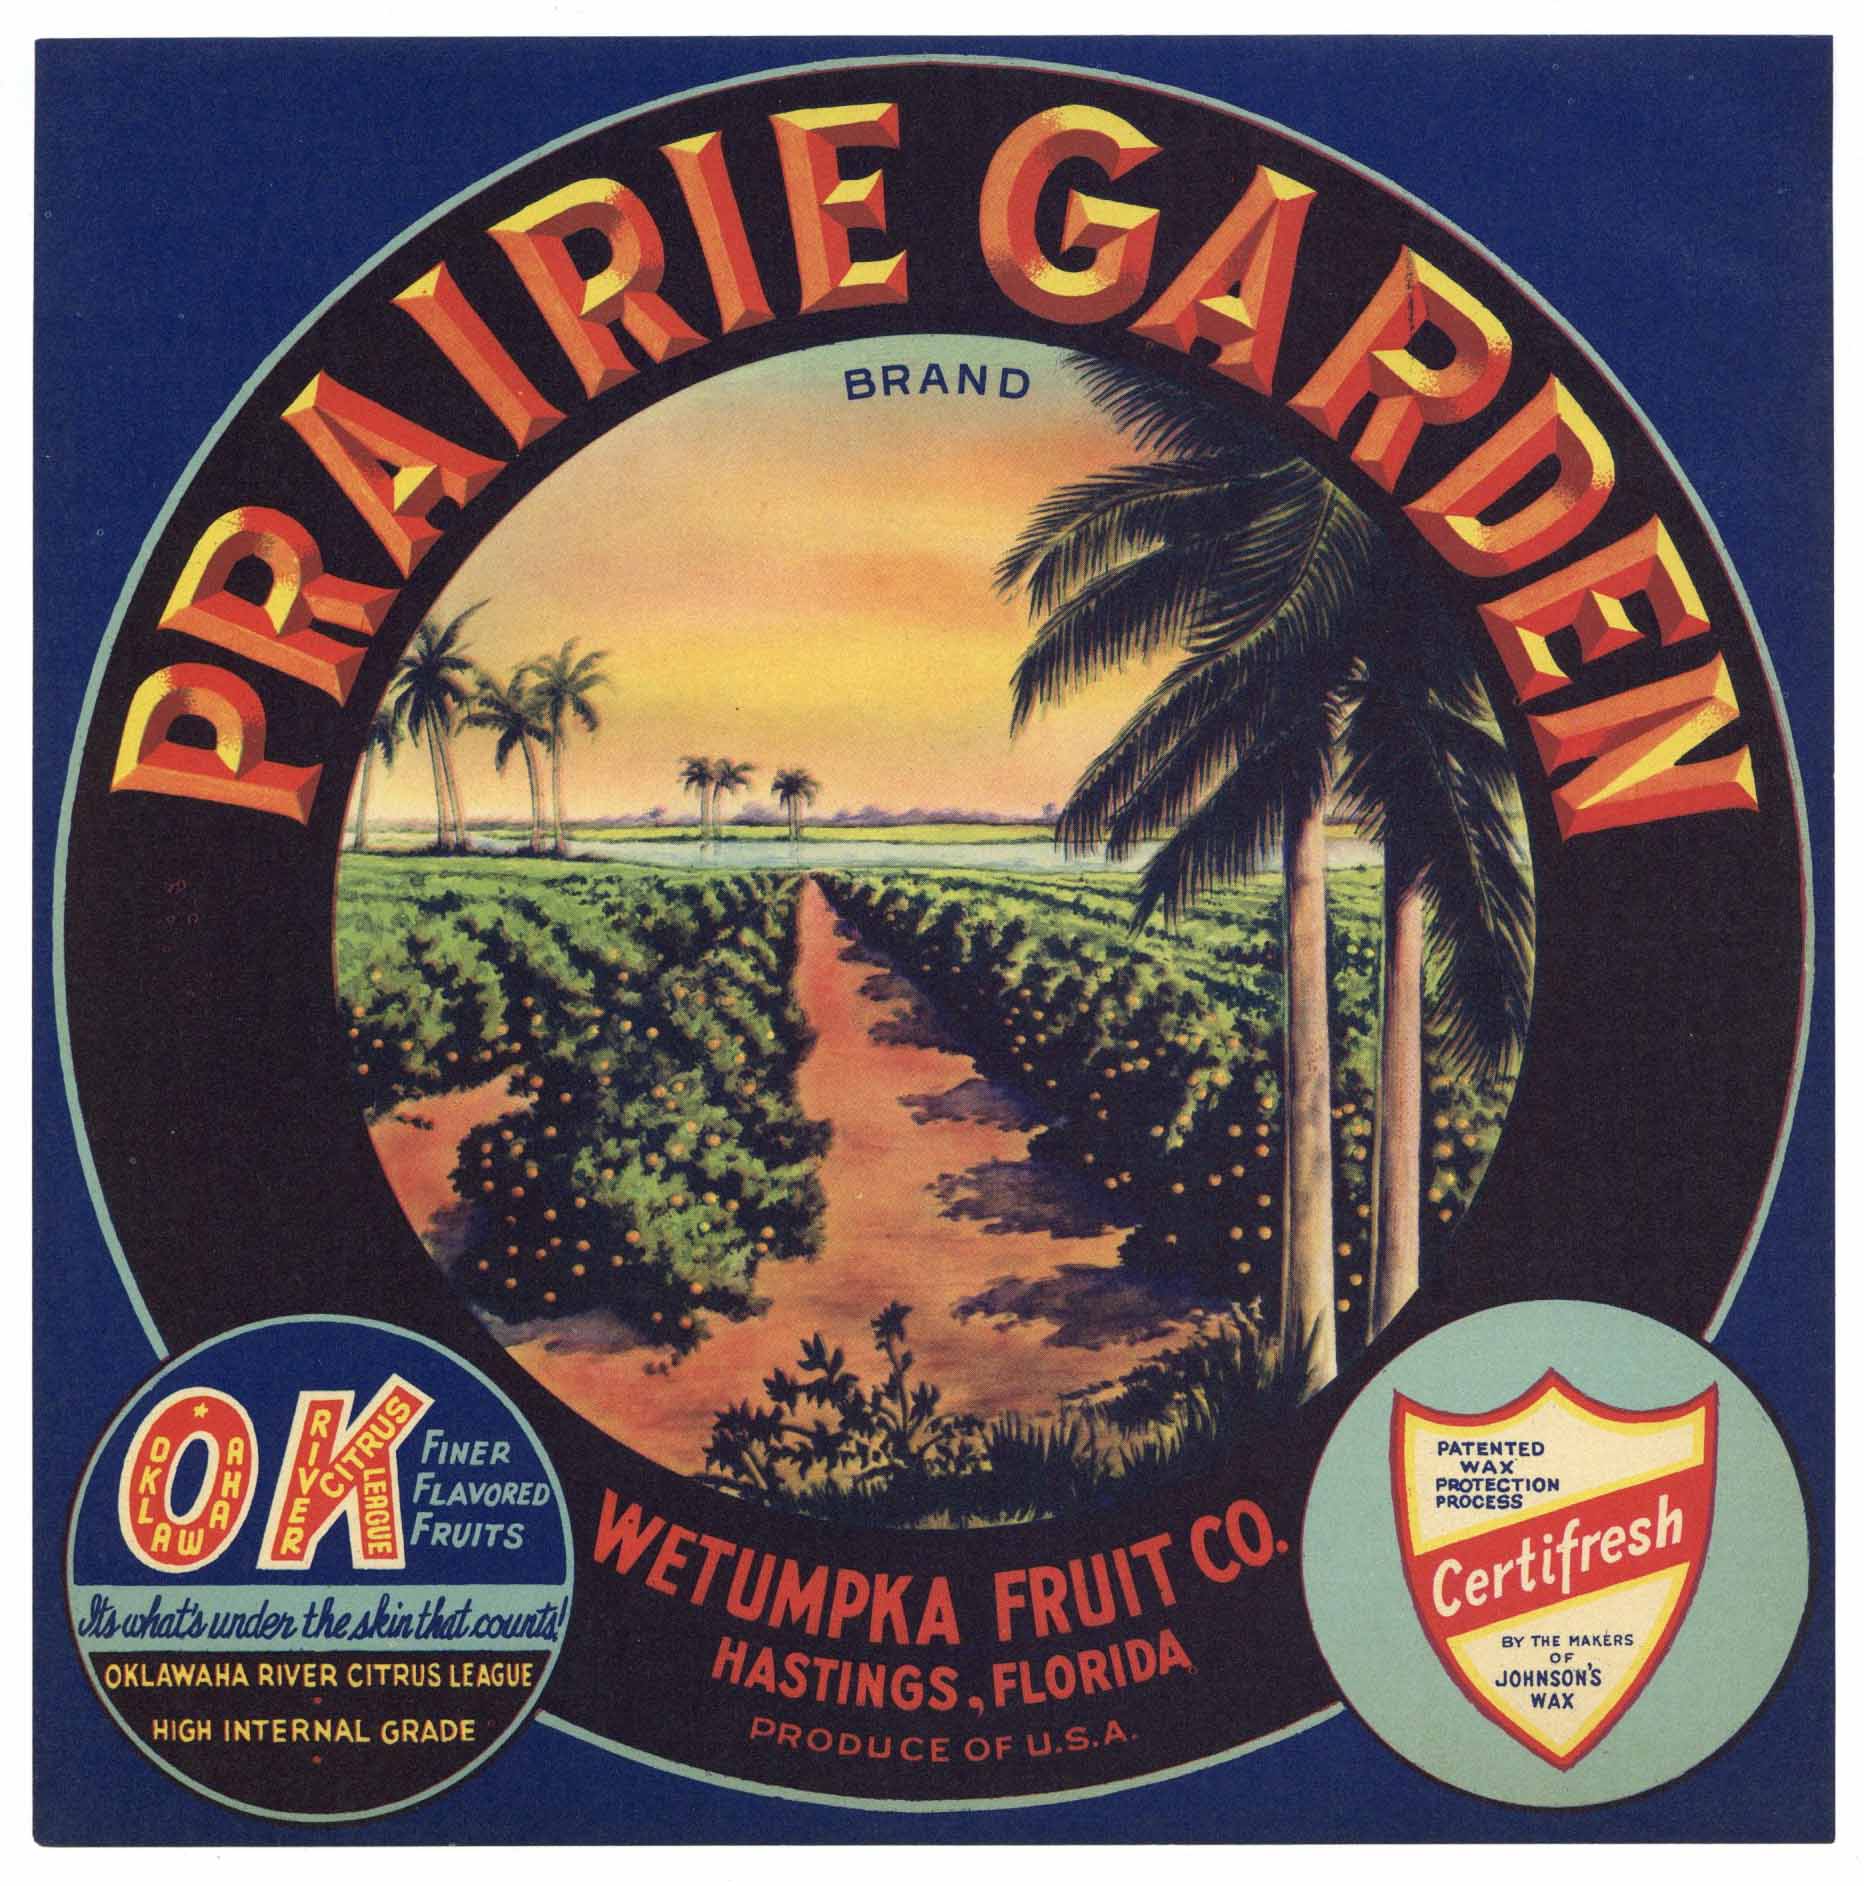 Prairie Garden Brand Vintage Hastings Florida Citrus Crate Label